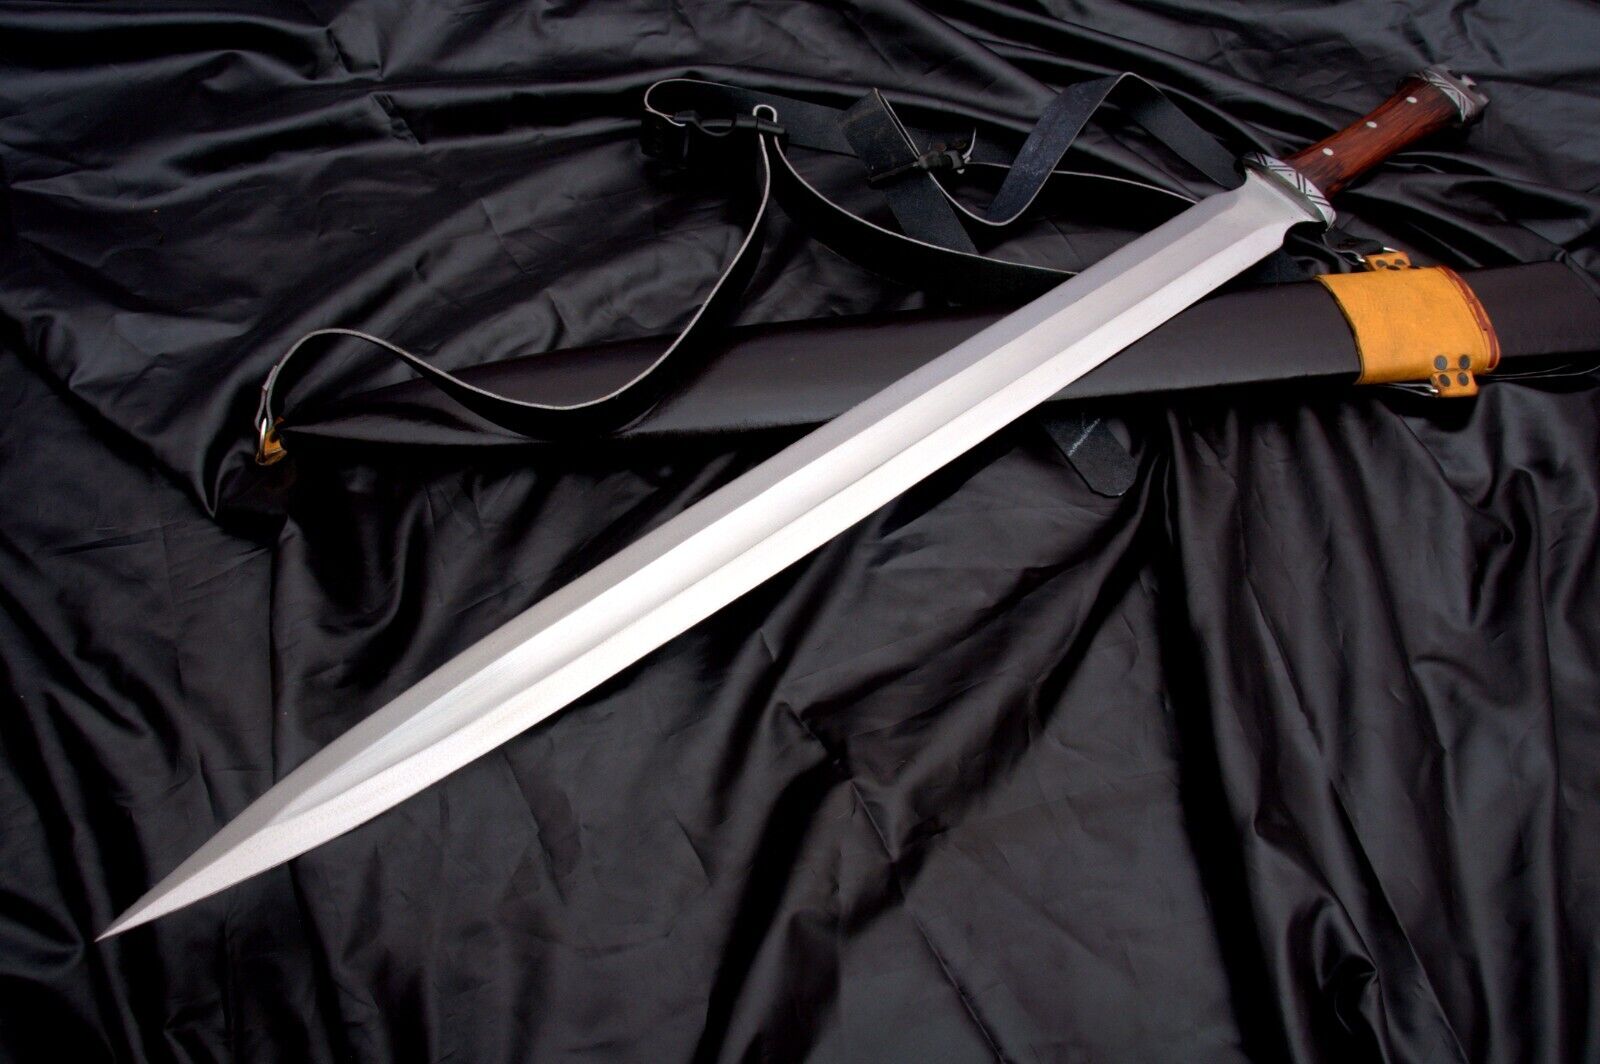 Norseman Viking Sword-24 inches Handmade sword-Hunting, Tactical,Combat sword